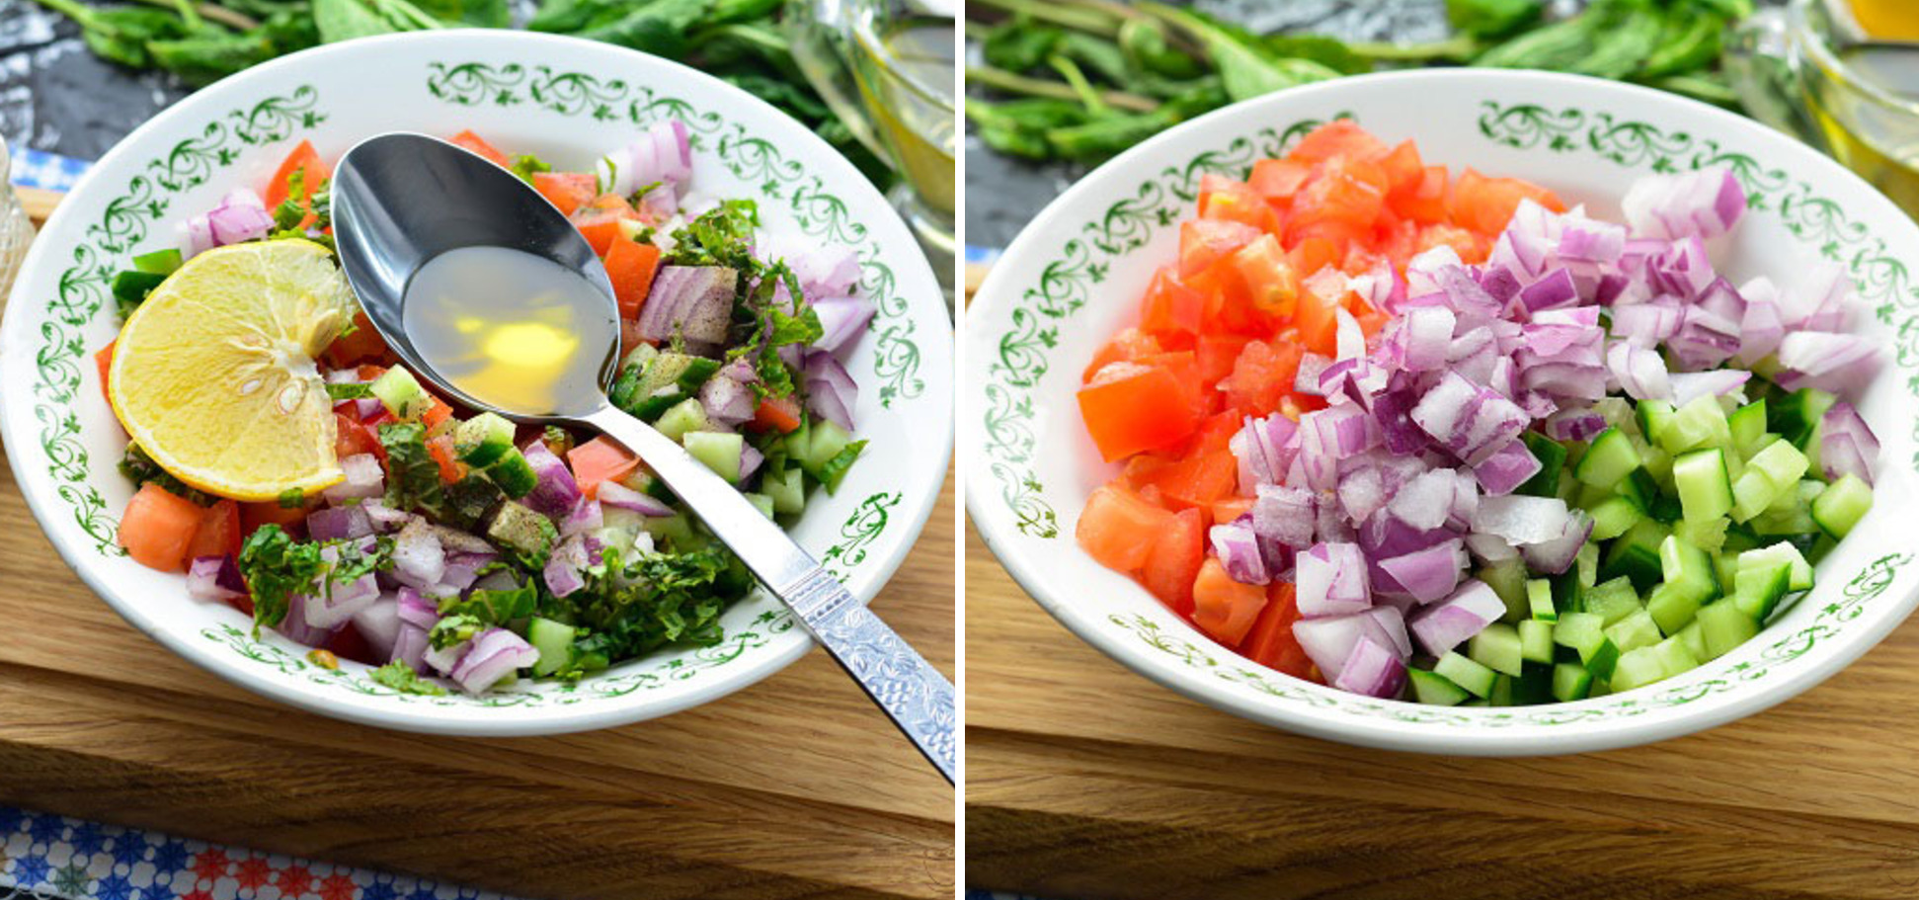 Mayonnaise-free salad recipe